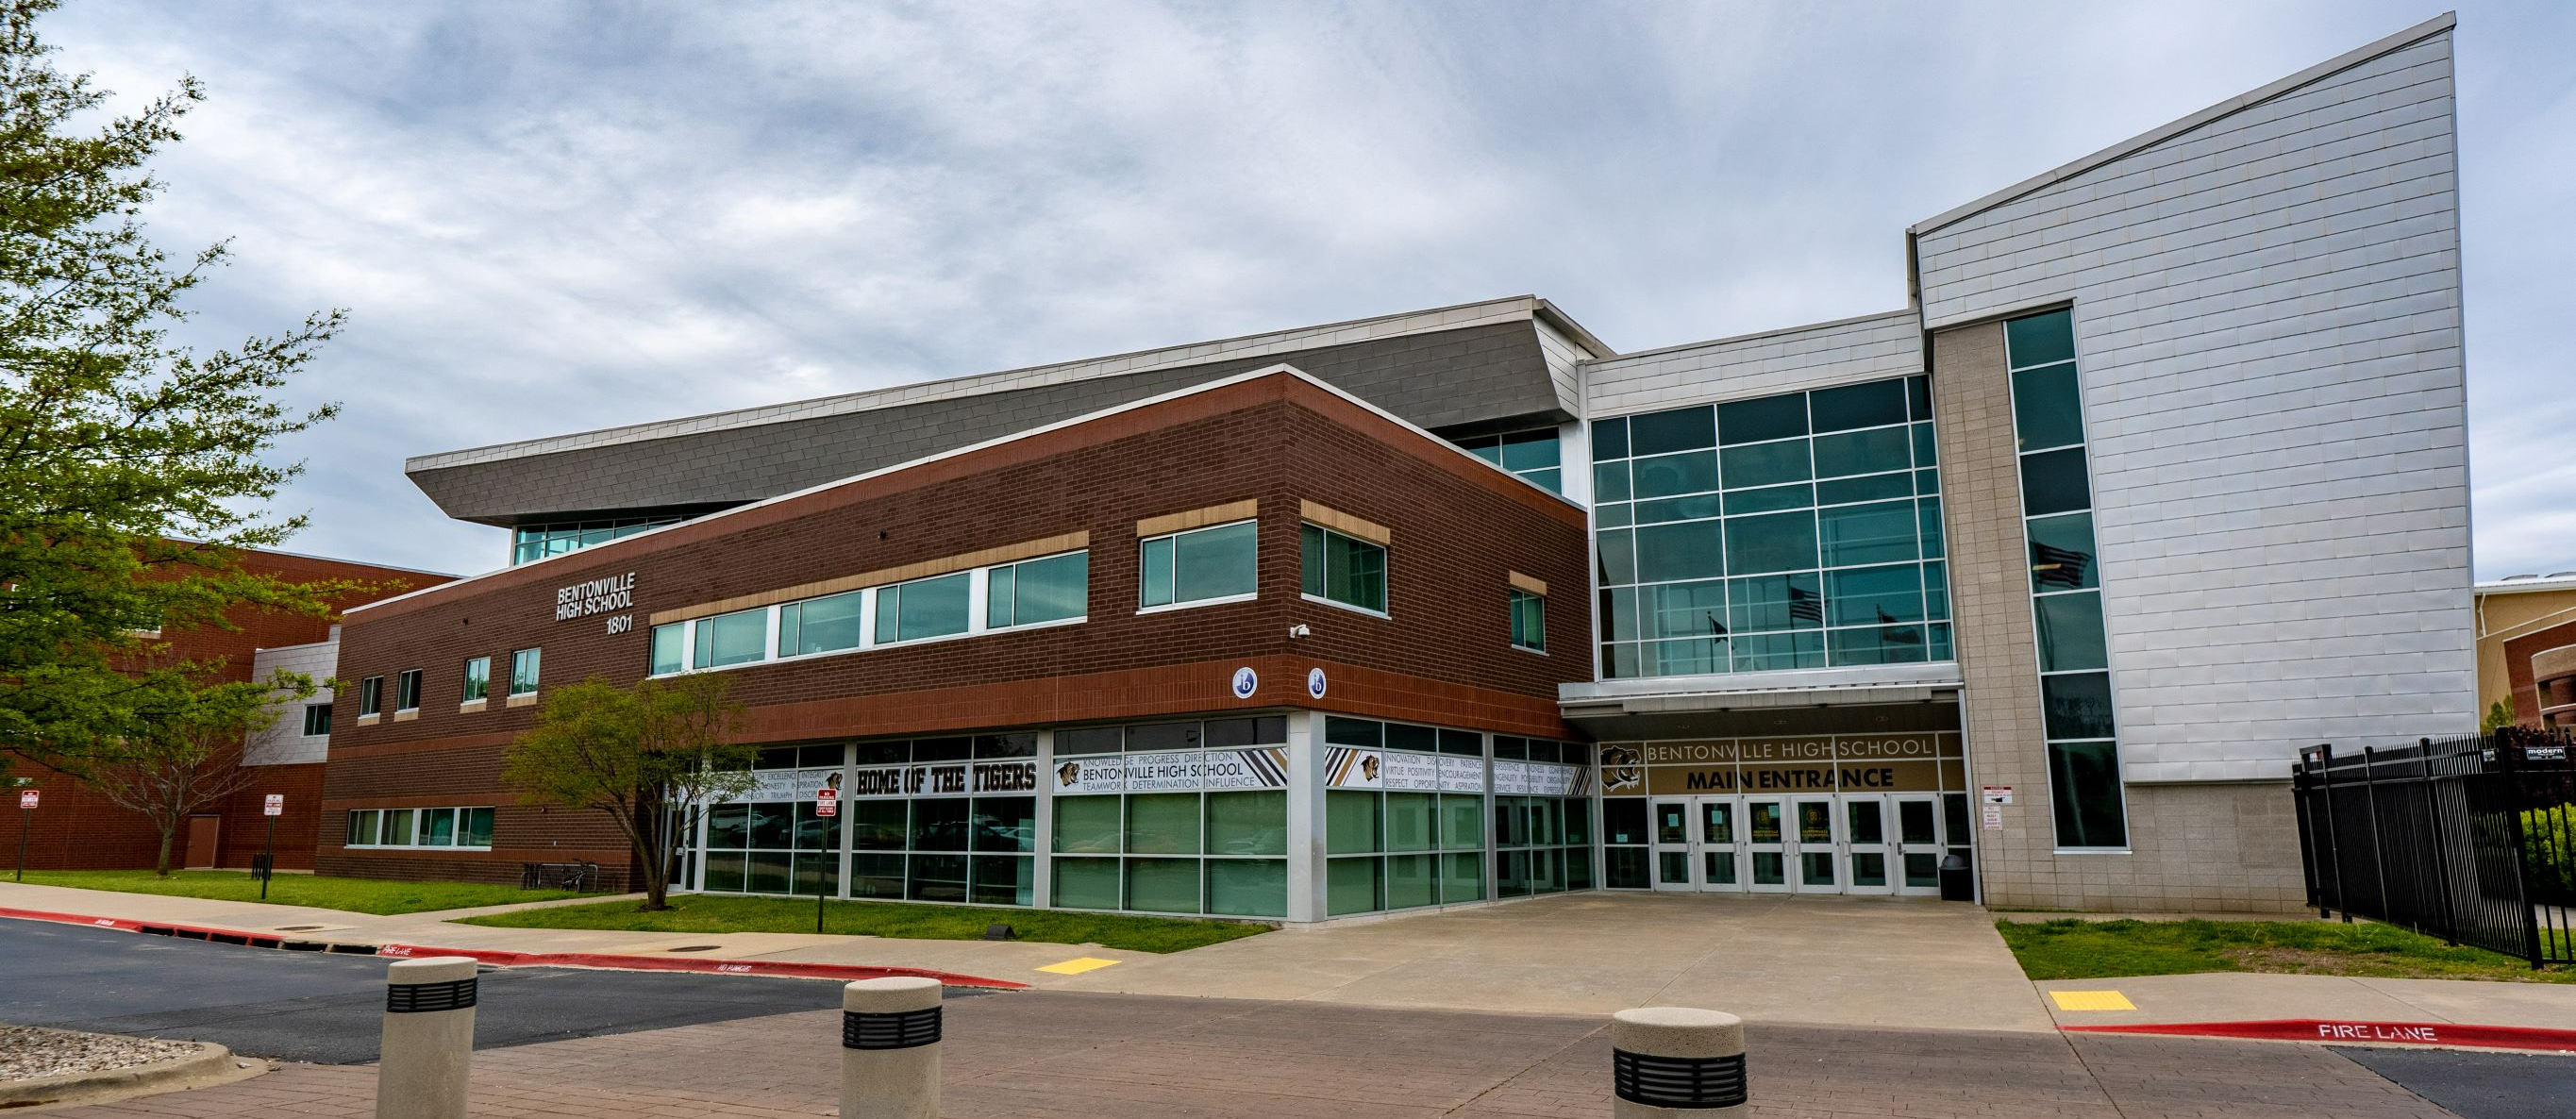 Bentonville High School Panorama